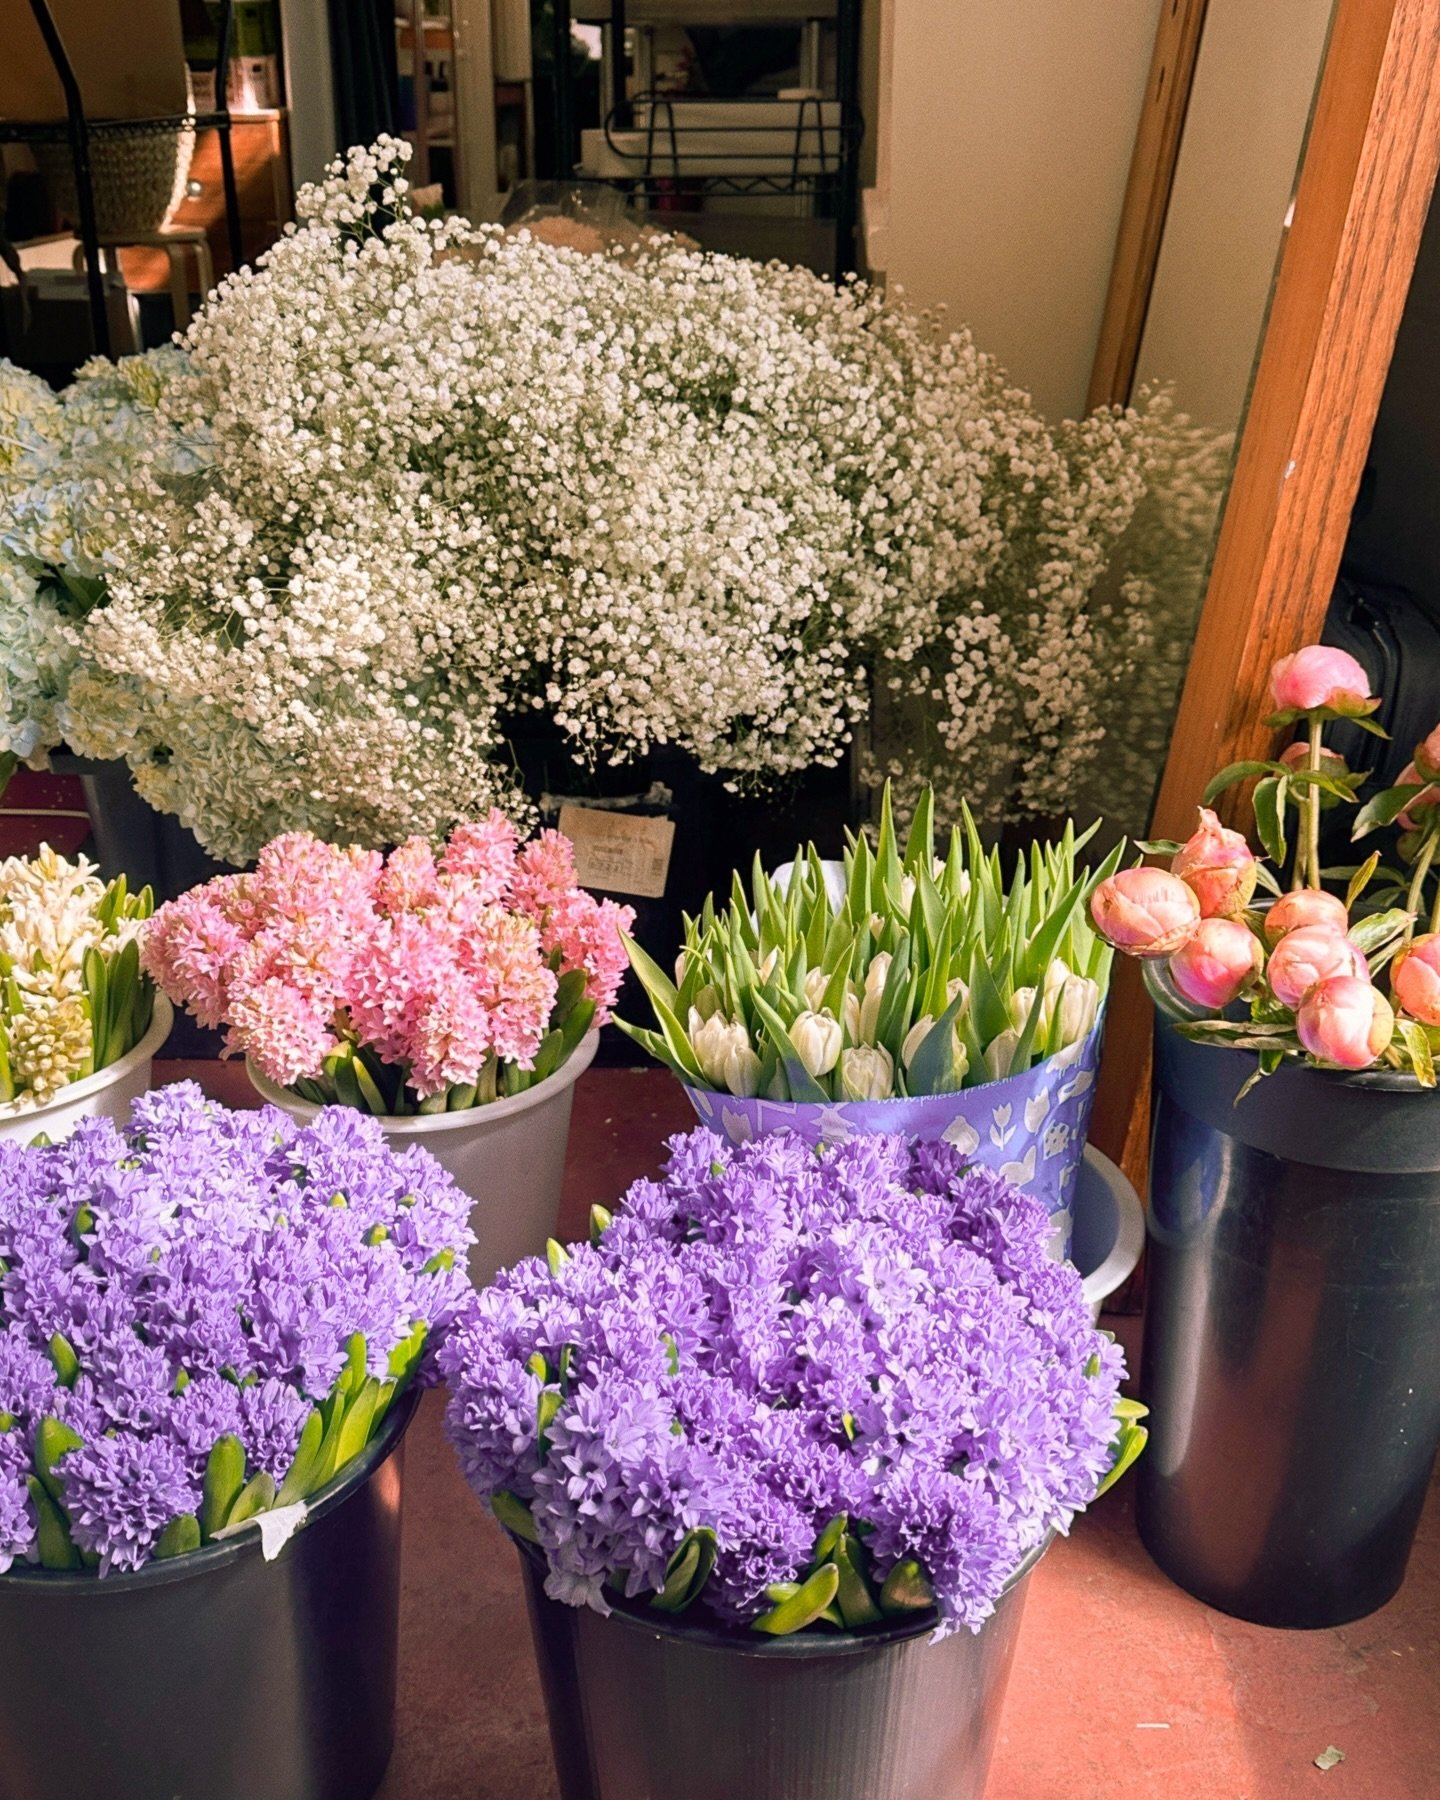 Spring weddings bring hyacinth, tulips, and peonies - and we couldn&rsquo;t be happier about it.

〰

#FloralDesign #WeddingFlorals #FloralShop #Florist #FloralInspo #ErgoFloral #ErgoWedding #MinnesotaFlorist #SpringFlowers